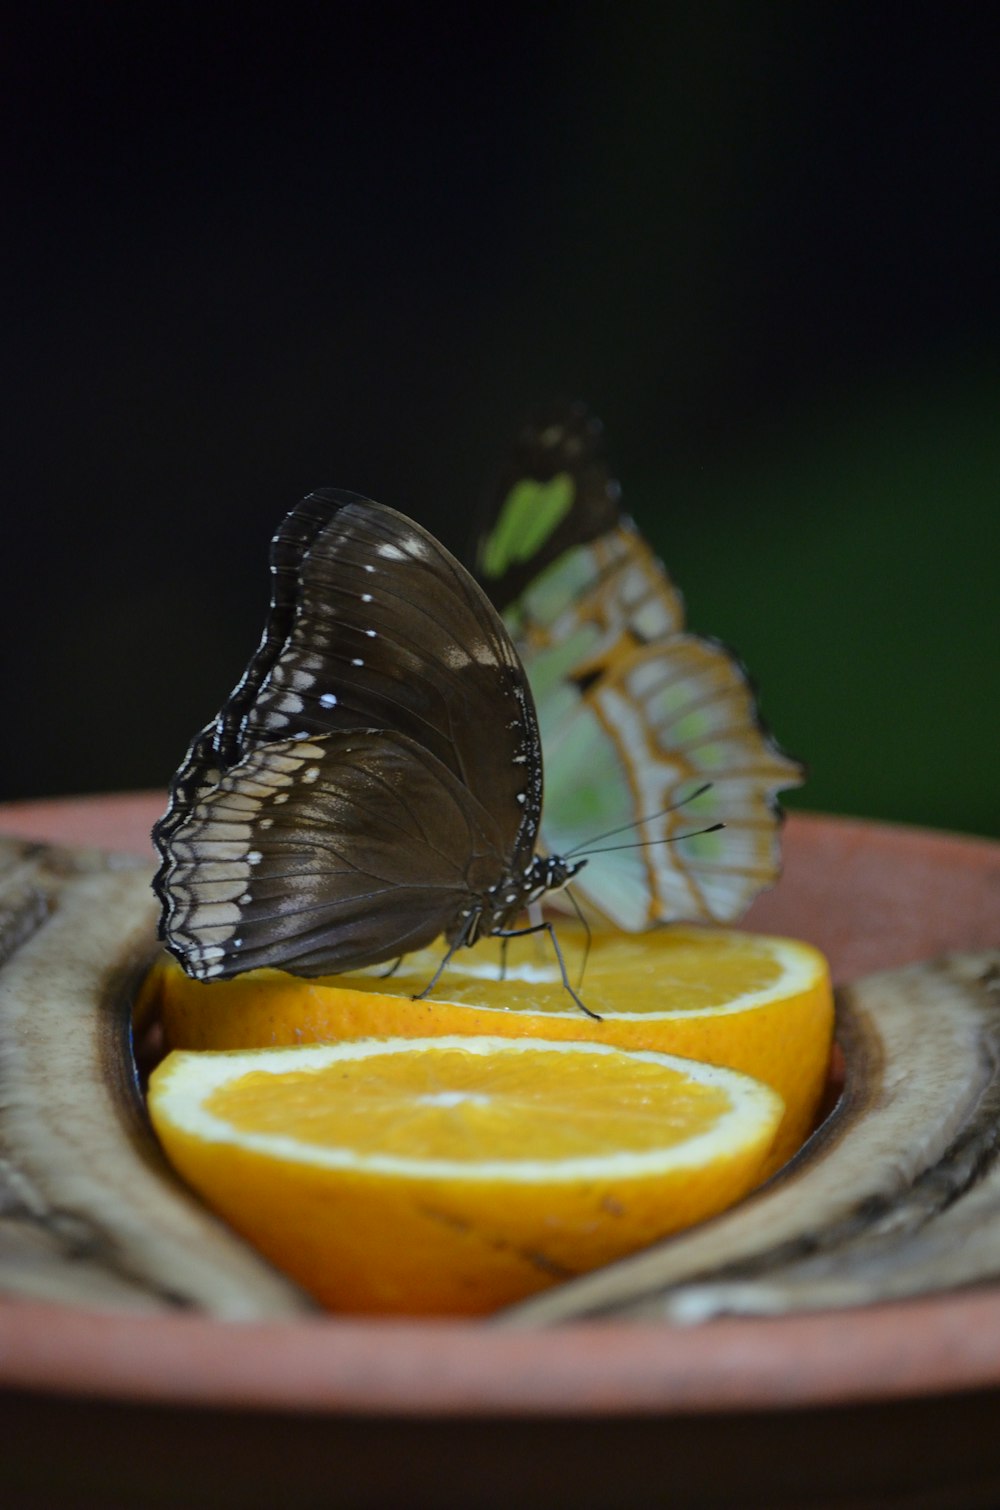 una mariposa sentada en una rodaja de naranja en un plato